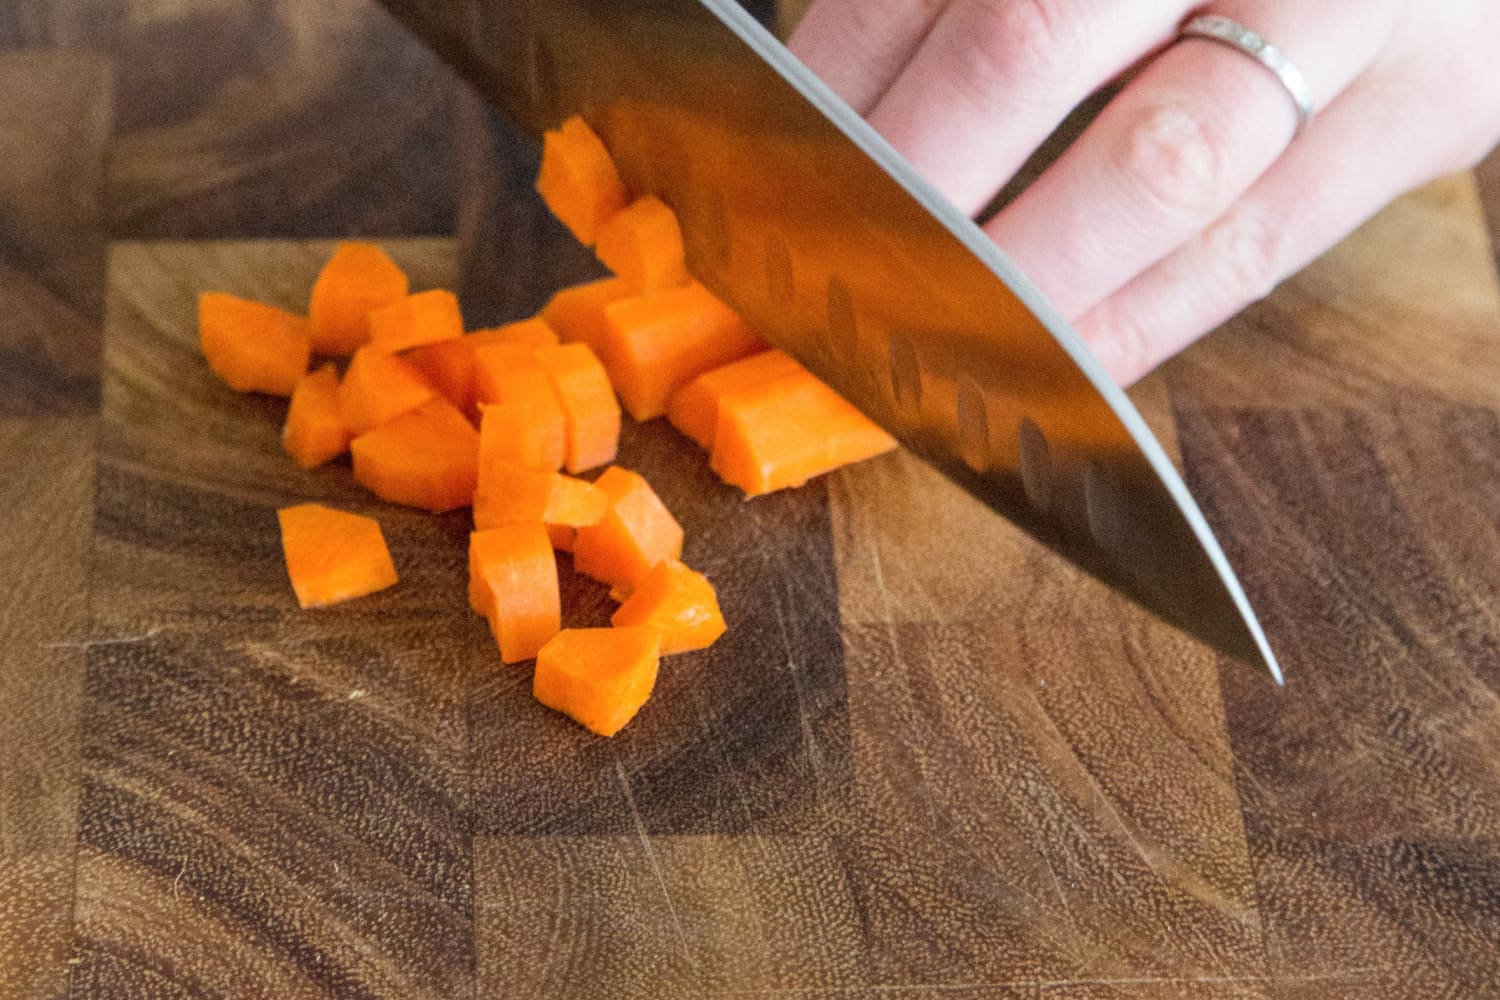 How To Cut Carrots: 4 Basic Cuts | Kitchn